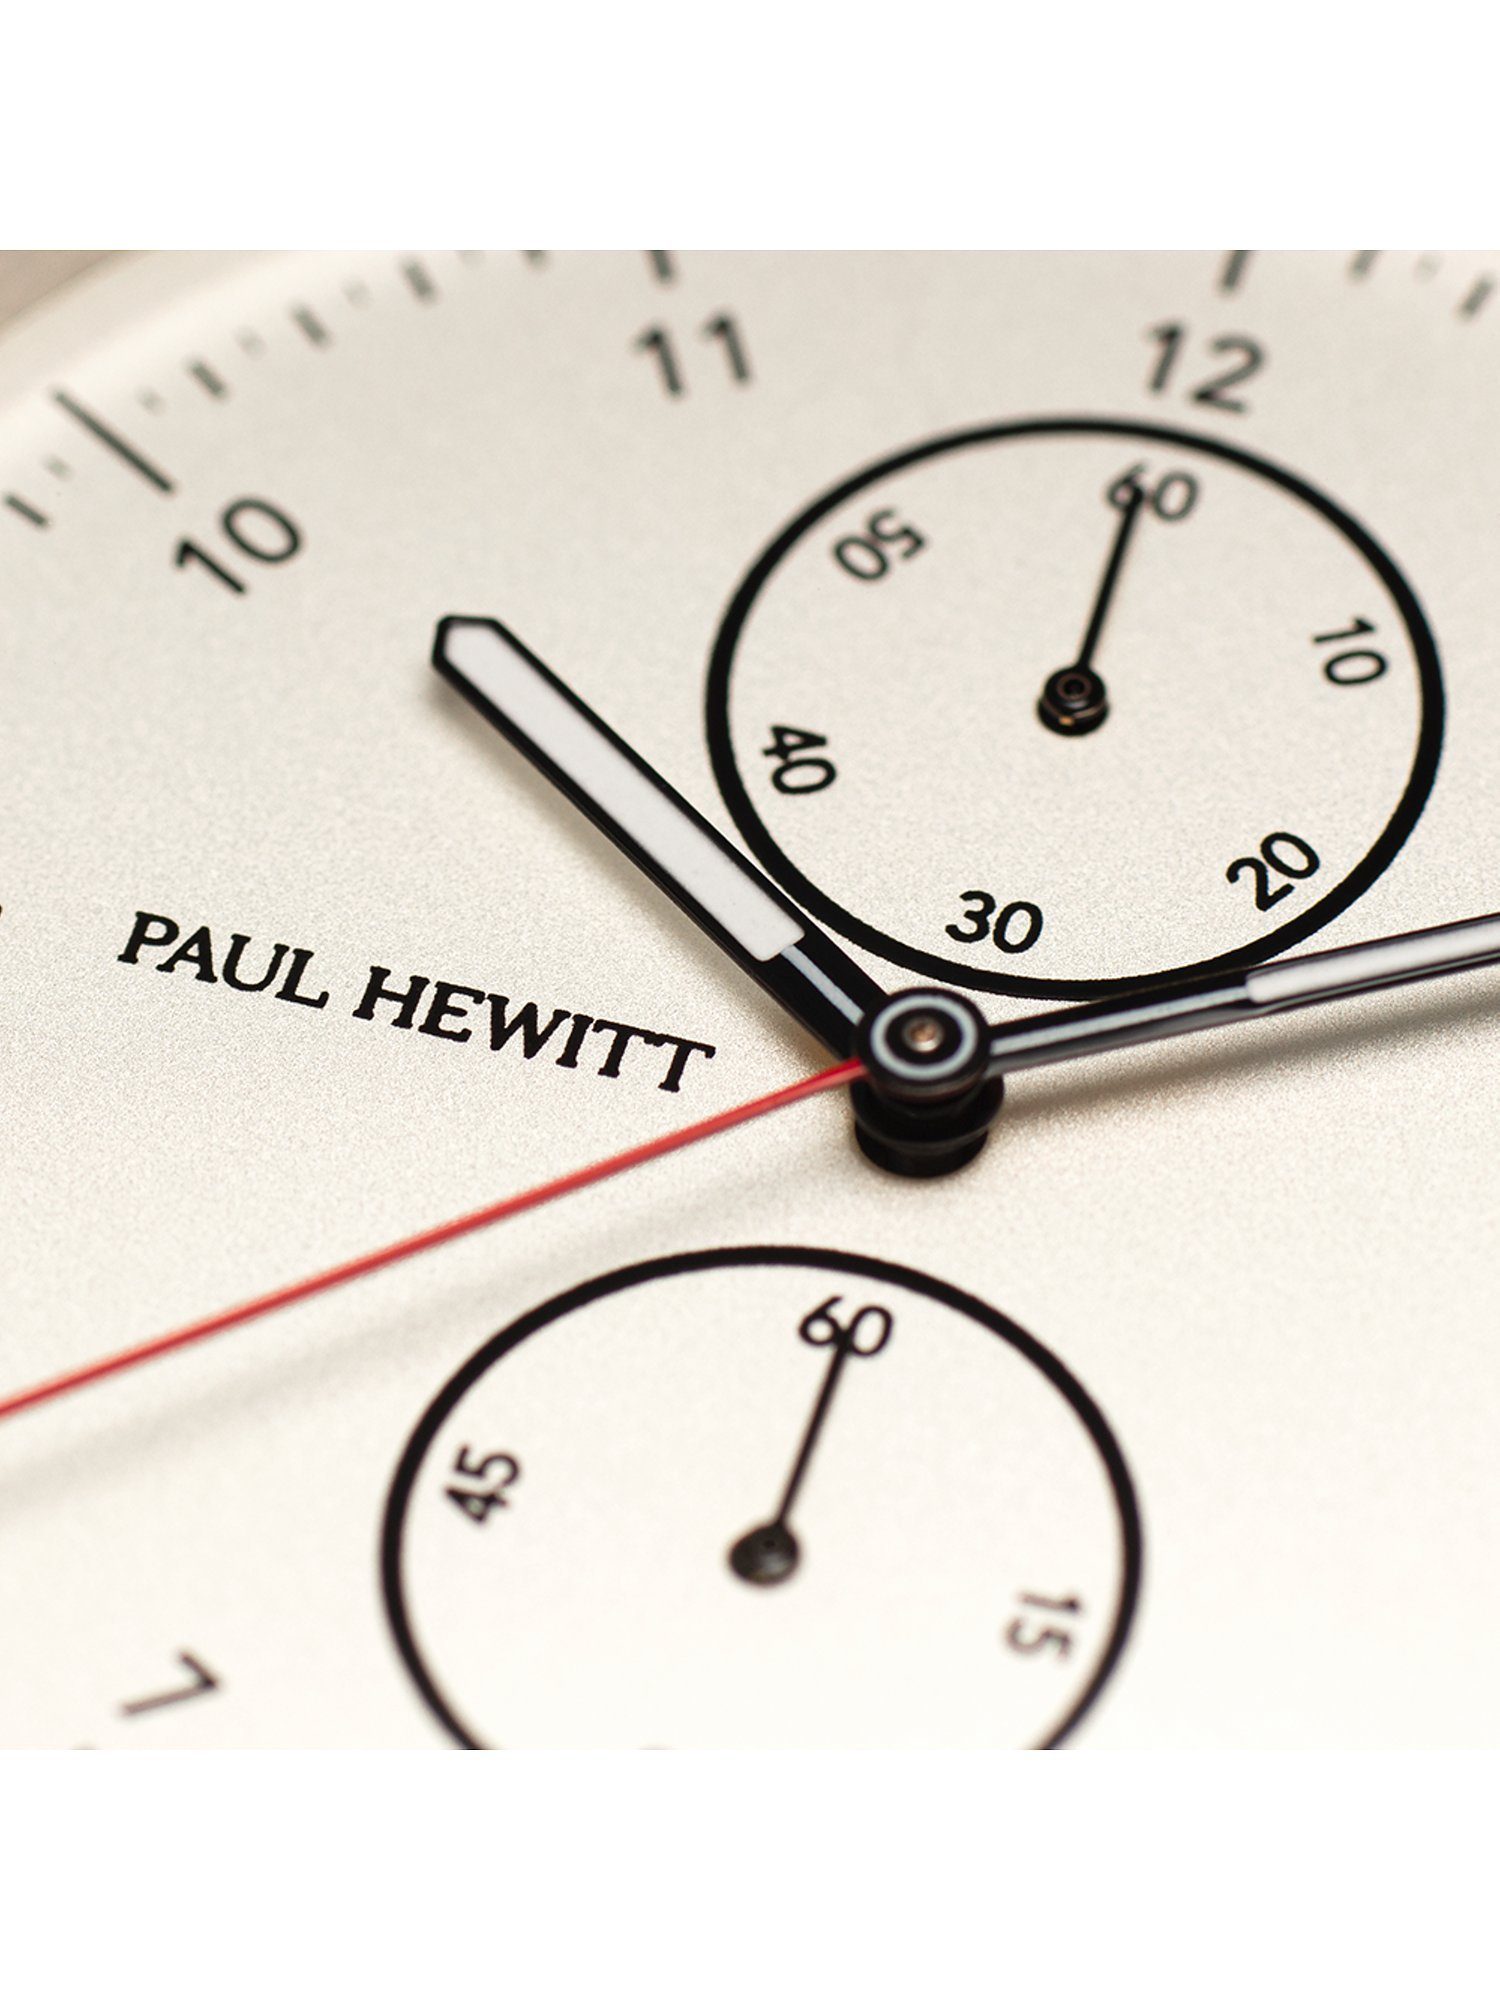 Hewitt Quarz, Herren-Uhren weiß Klassikuhr HEWITT Paul silber, Quarzuhr Analog PAUL